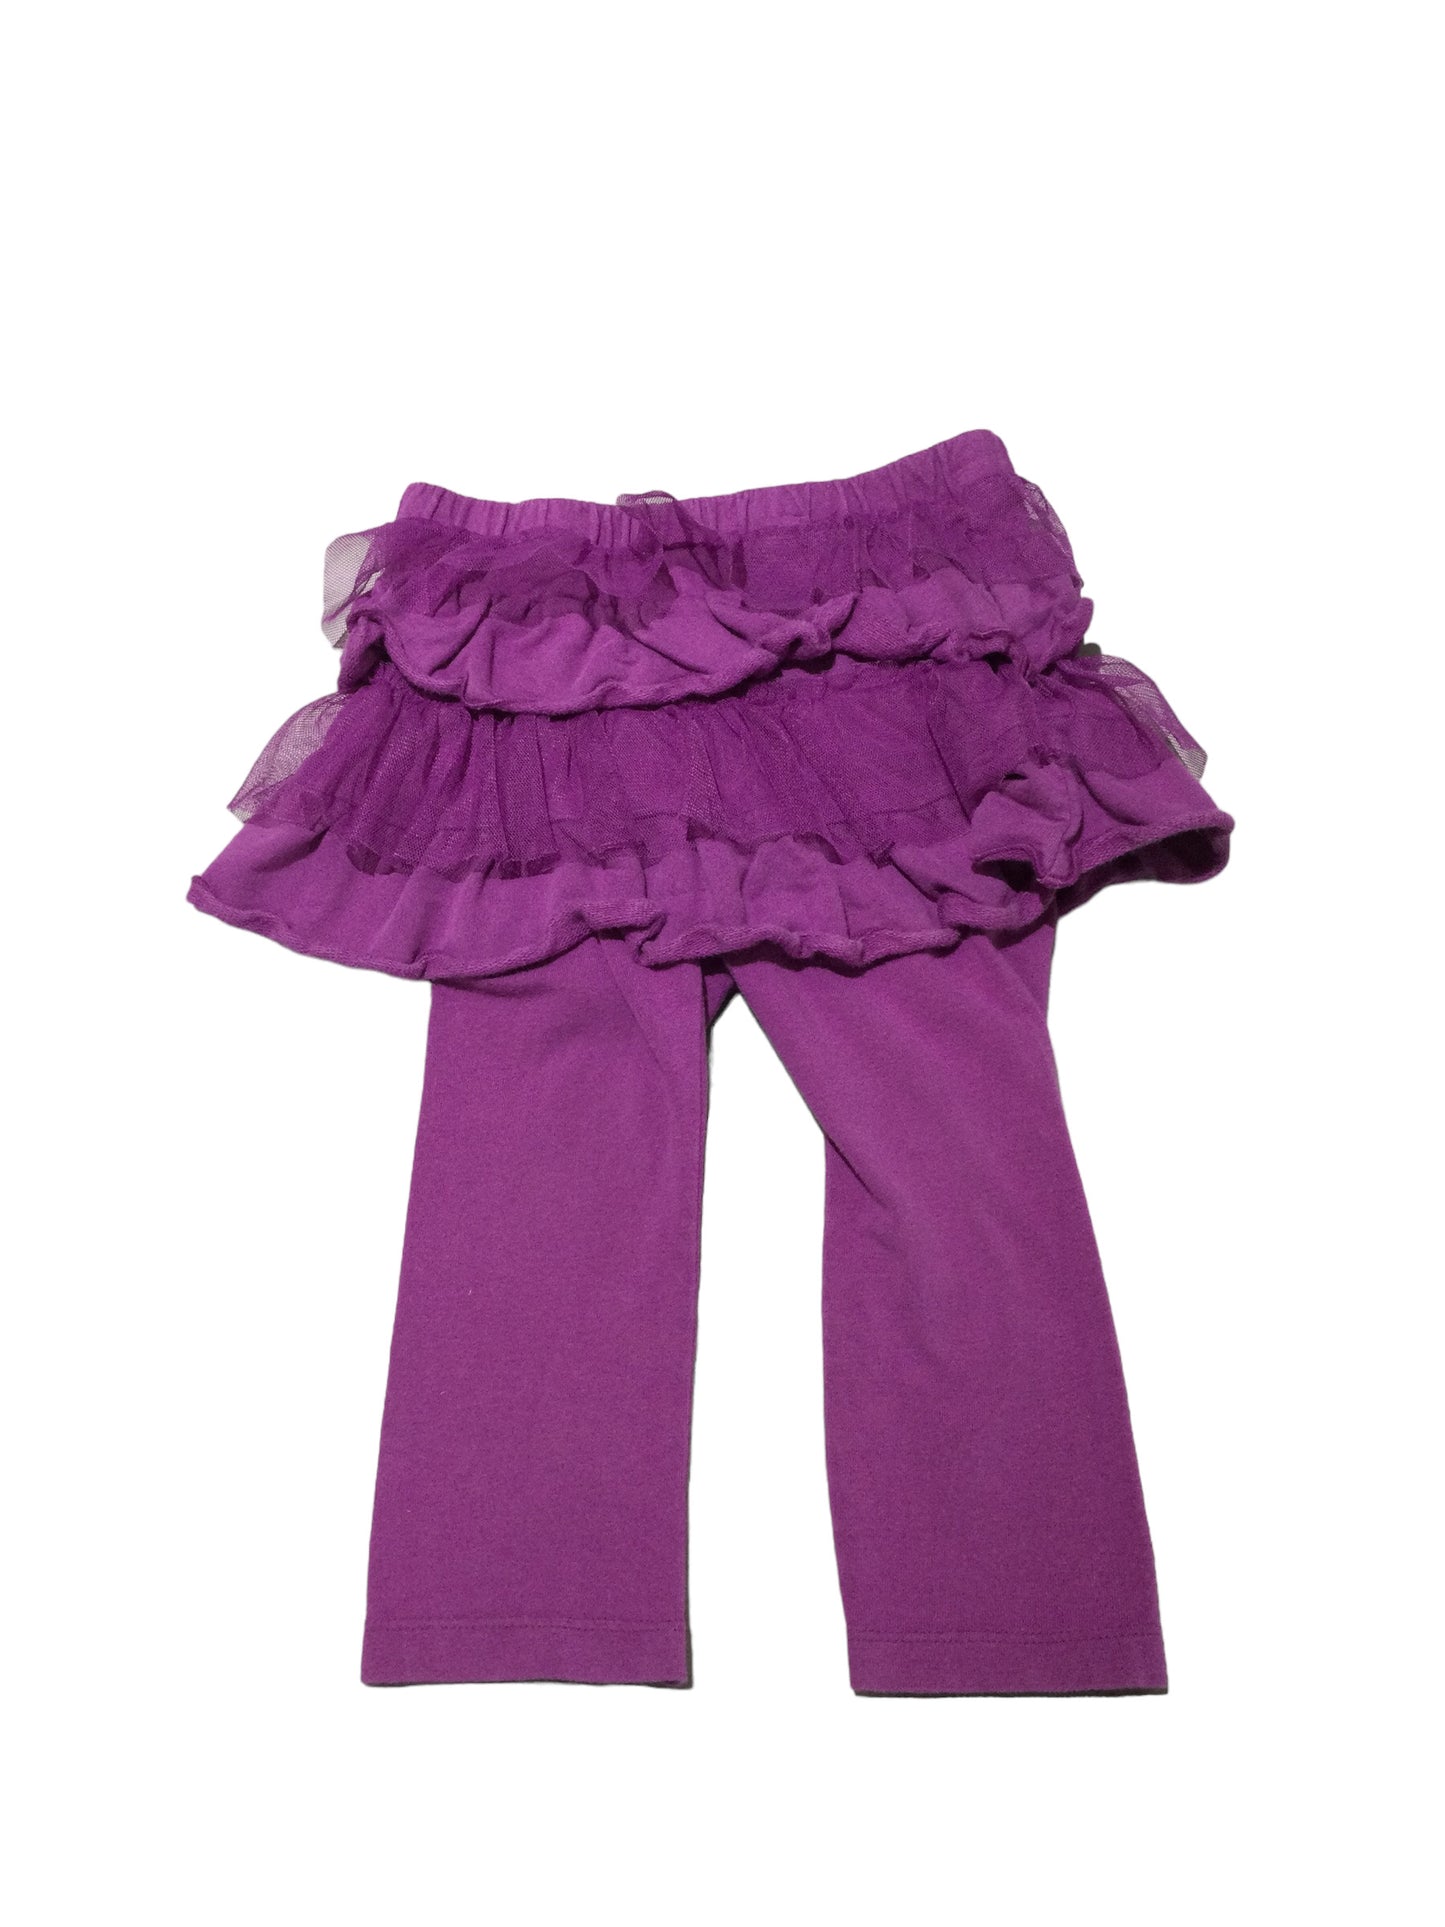 Purple Ruffle Skirt Leggings, size 2T